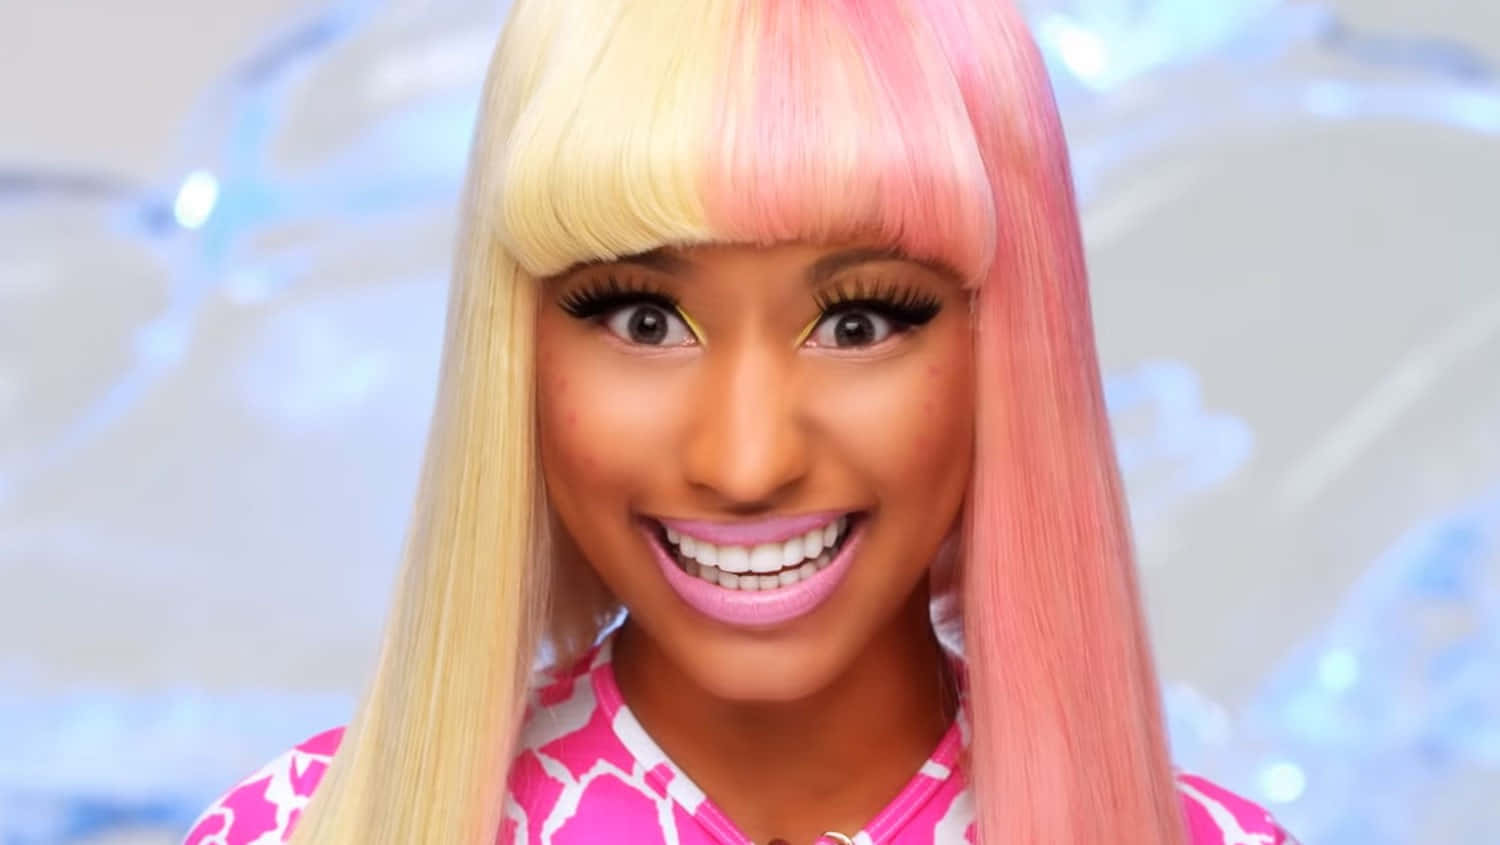 Nicki Minaj styling in her iconic look